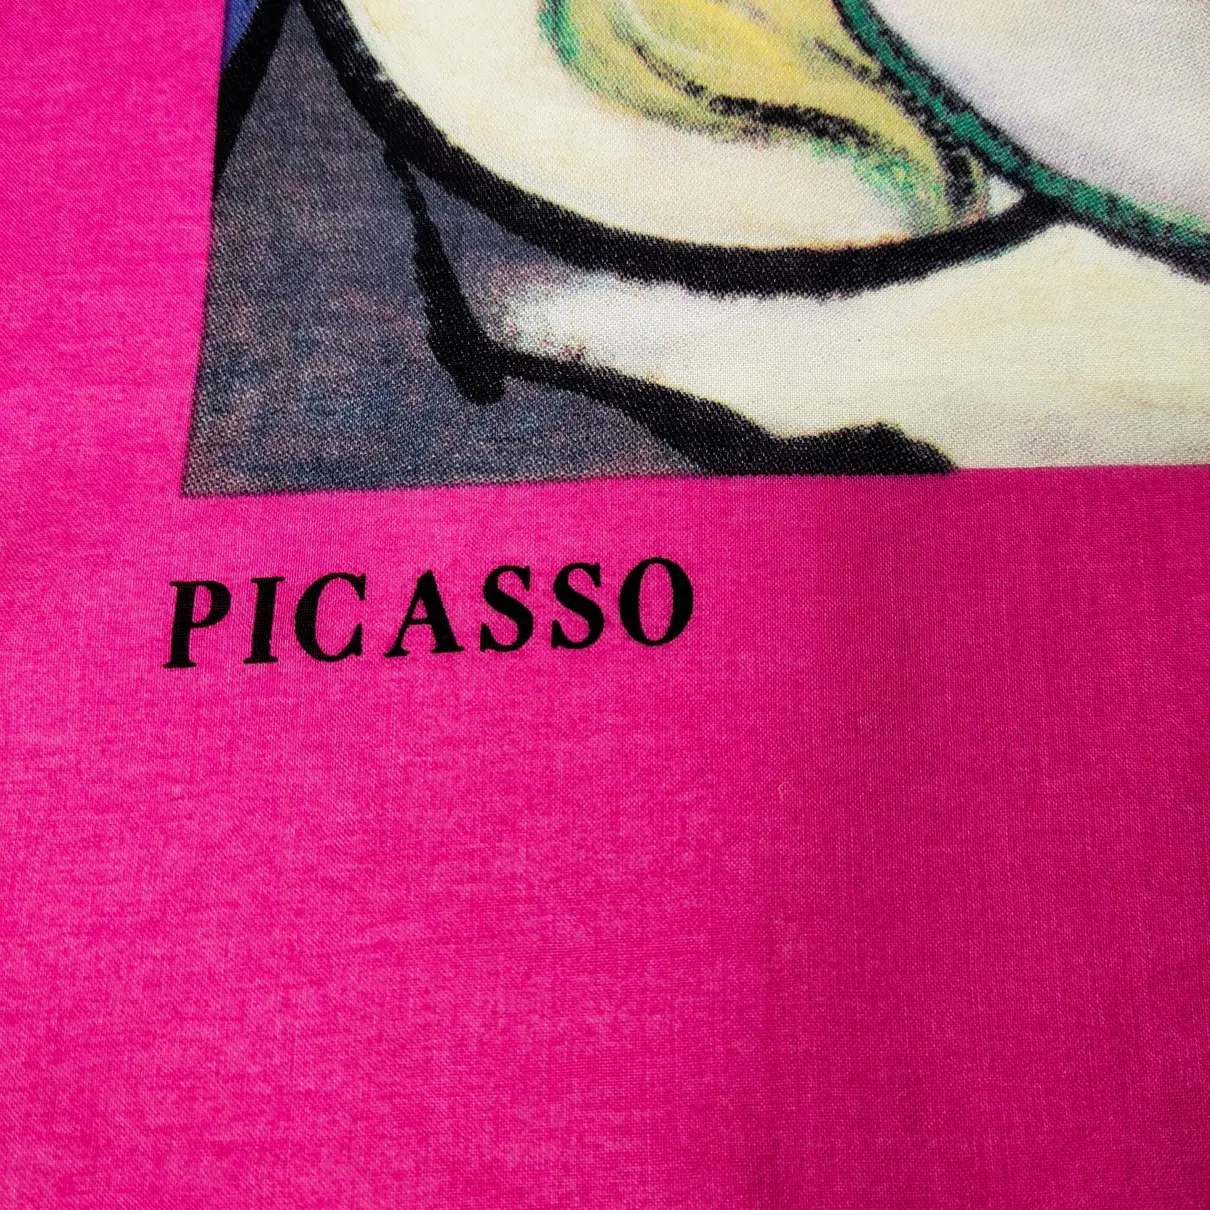 Buy Picasso Silk handkerchief online